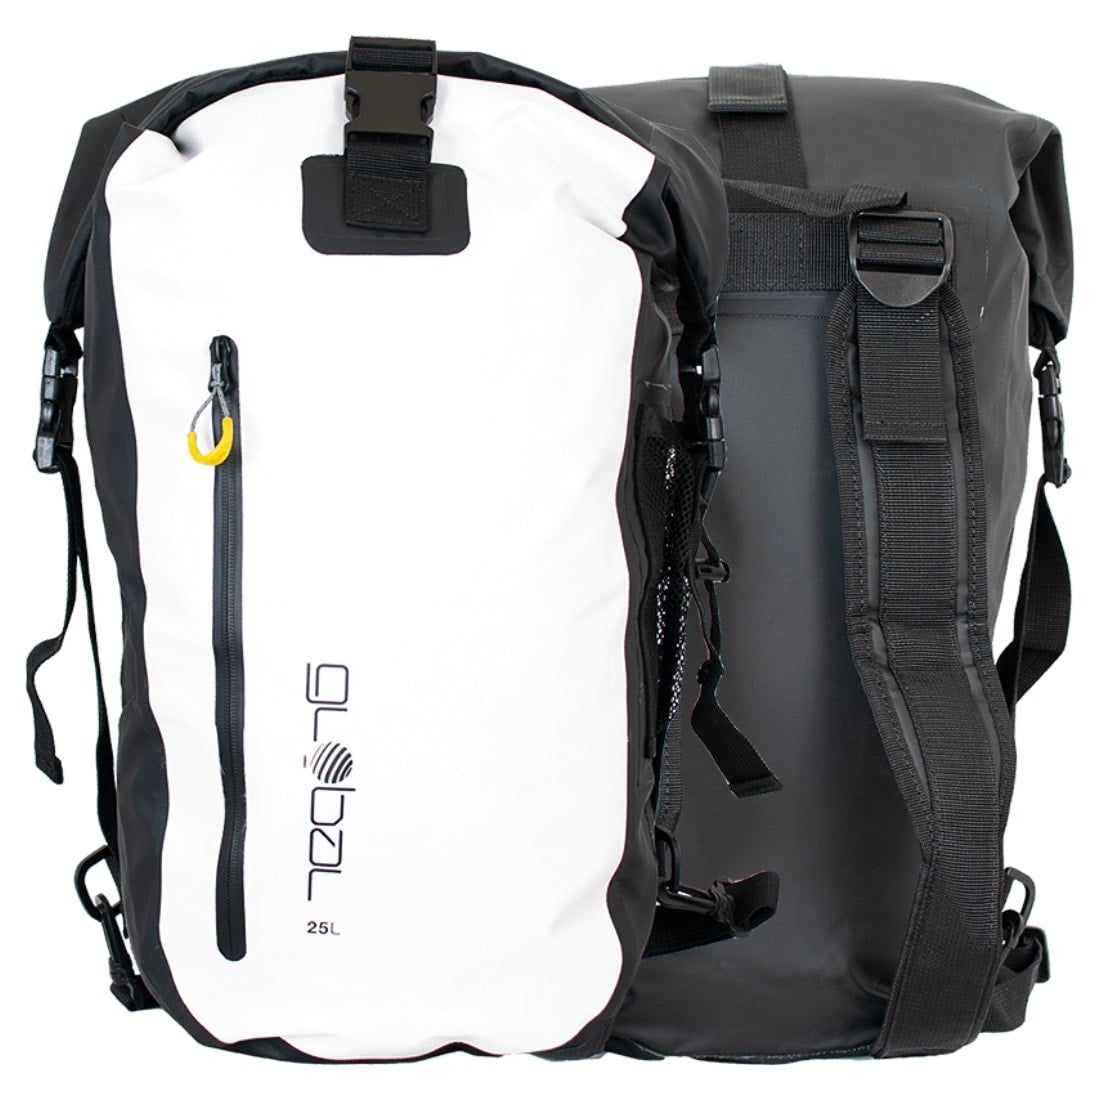 Global 25L Dry Bag Backpack - White - Wet/Dry Bag by Global 25L